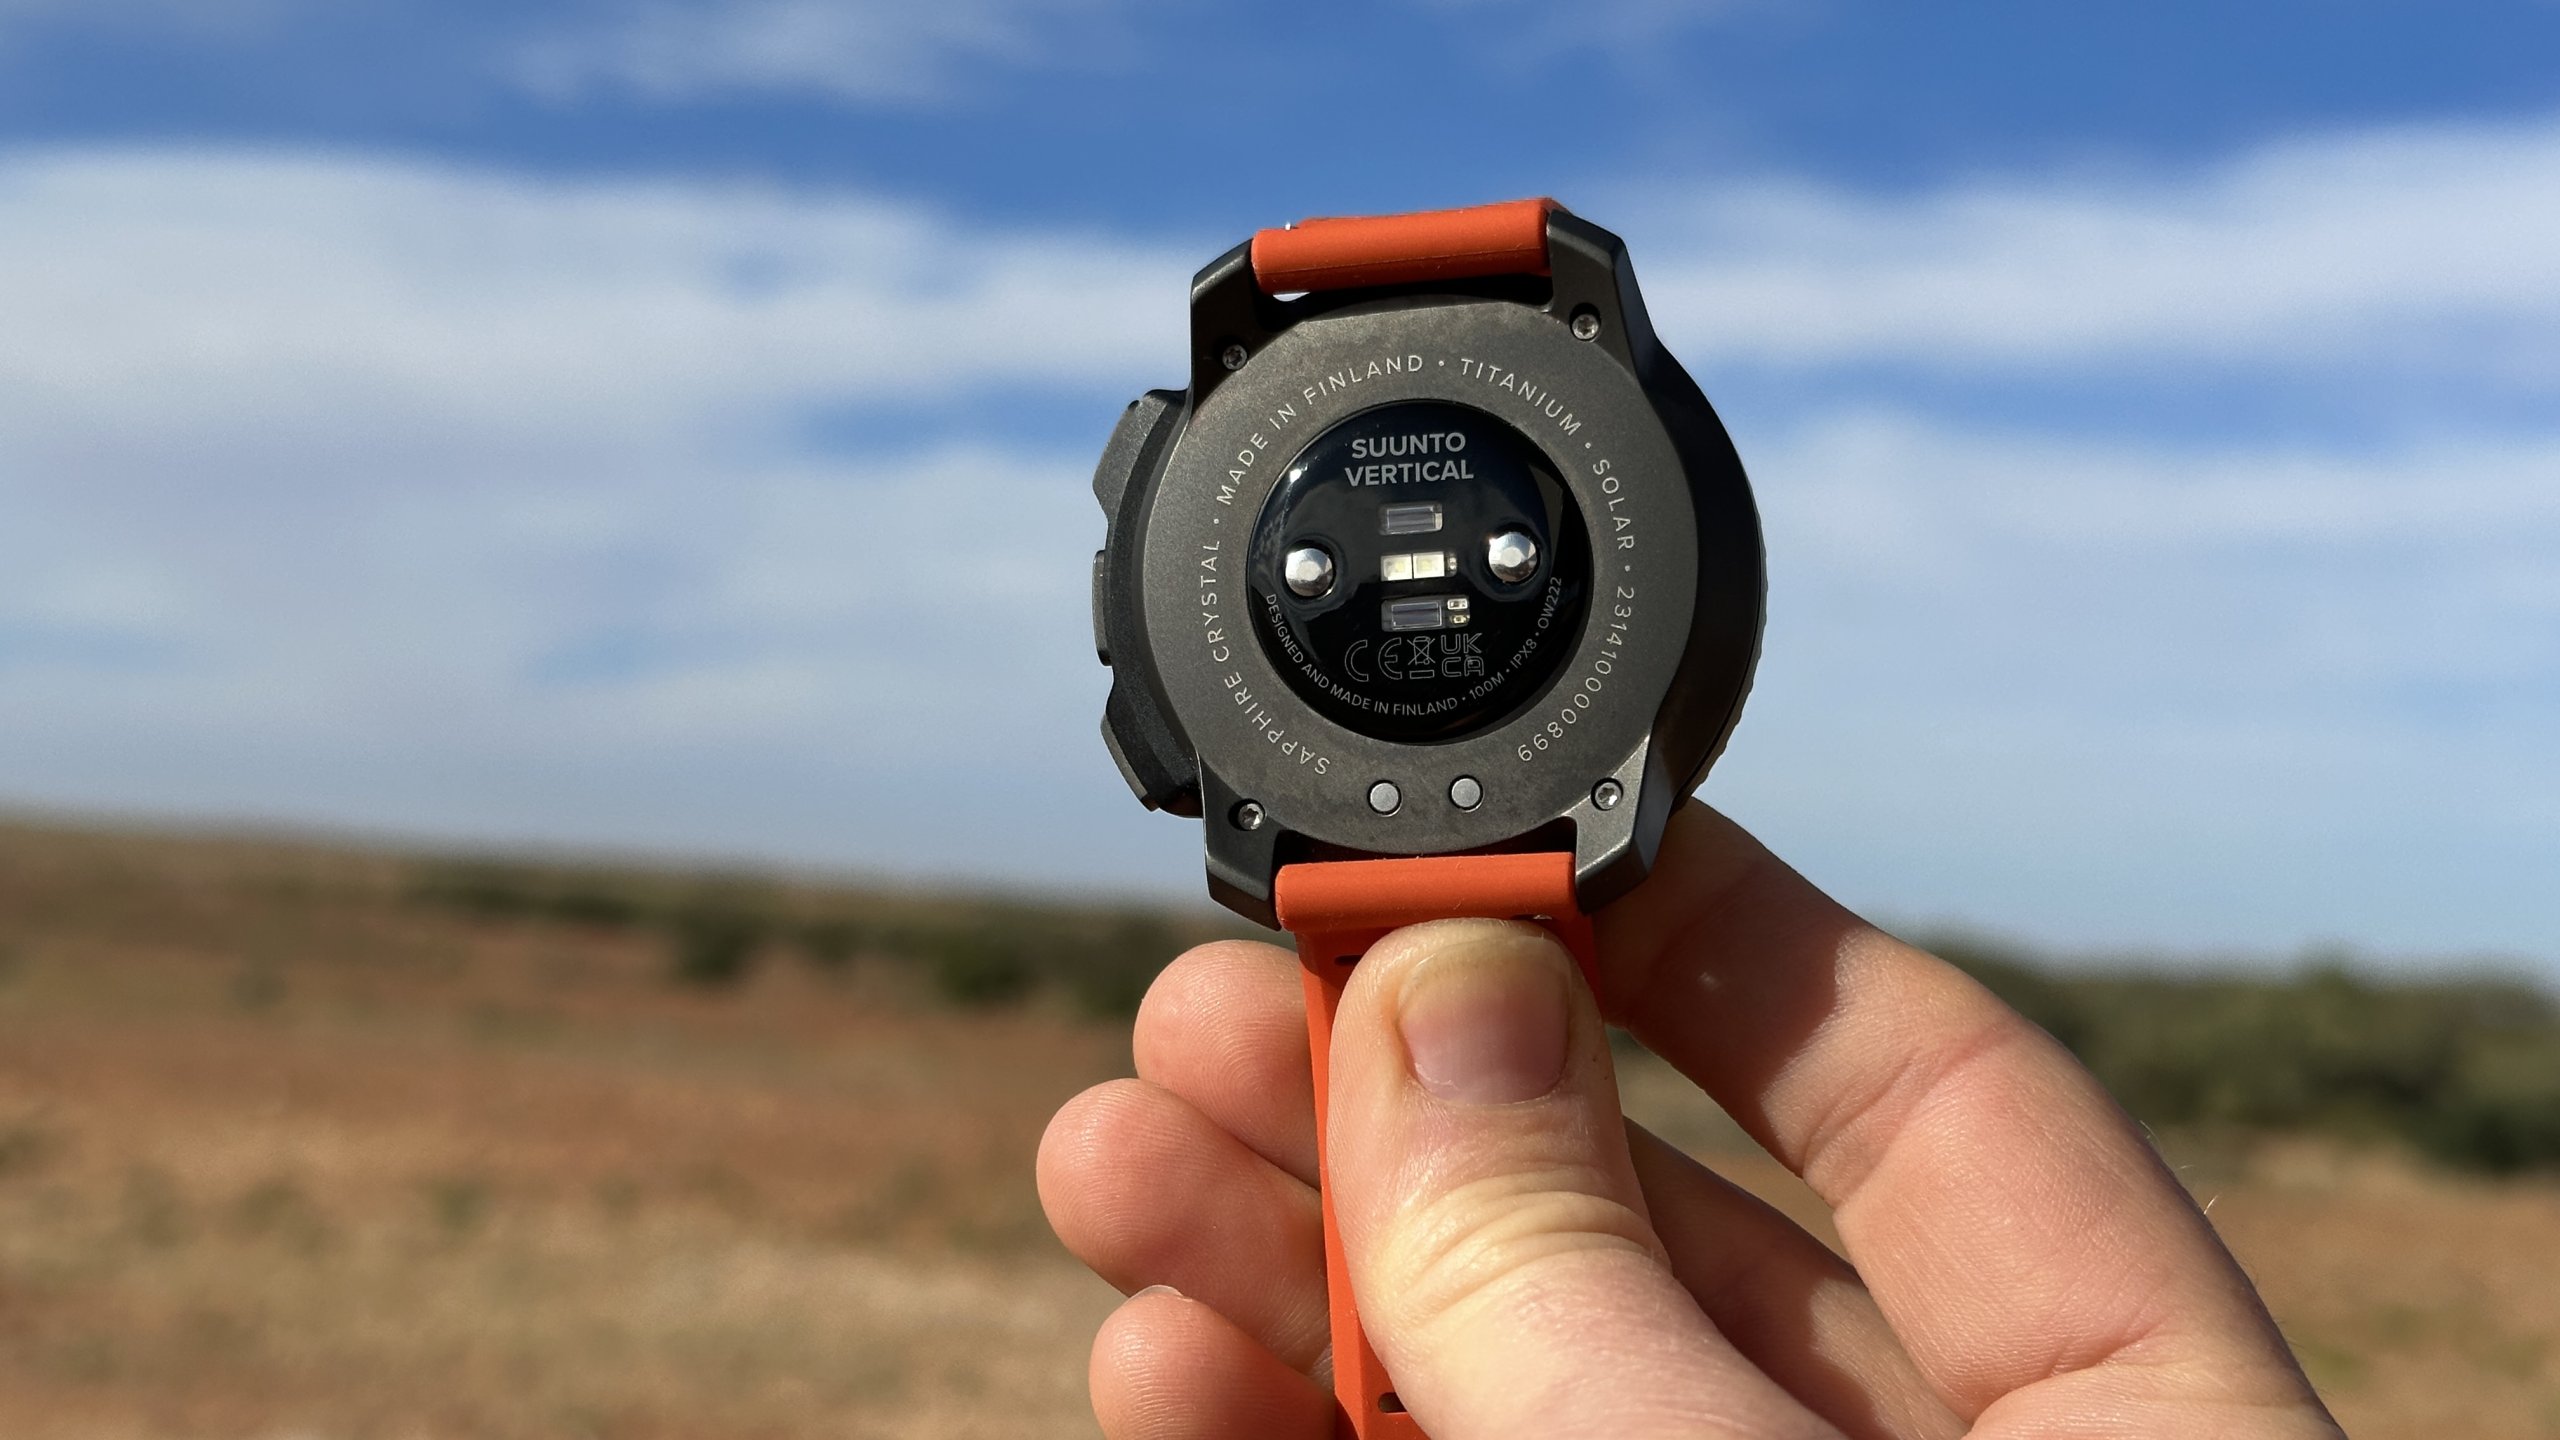 Suunto 5 Peak smartwatch review: Pricing, features, speed, screen